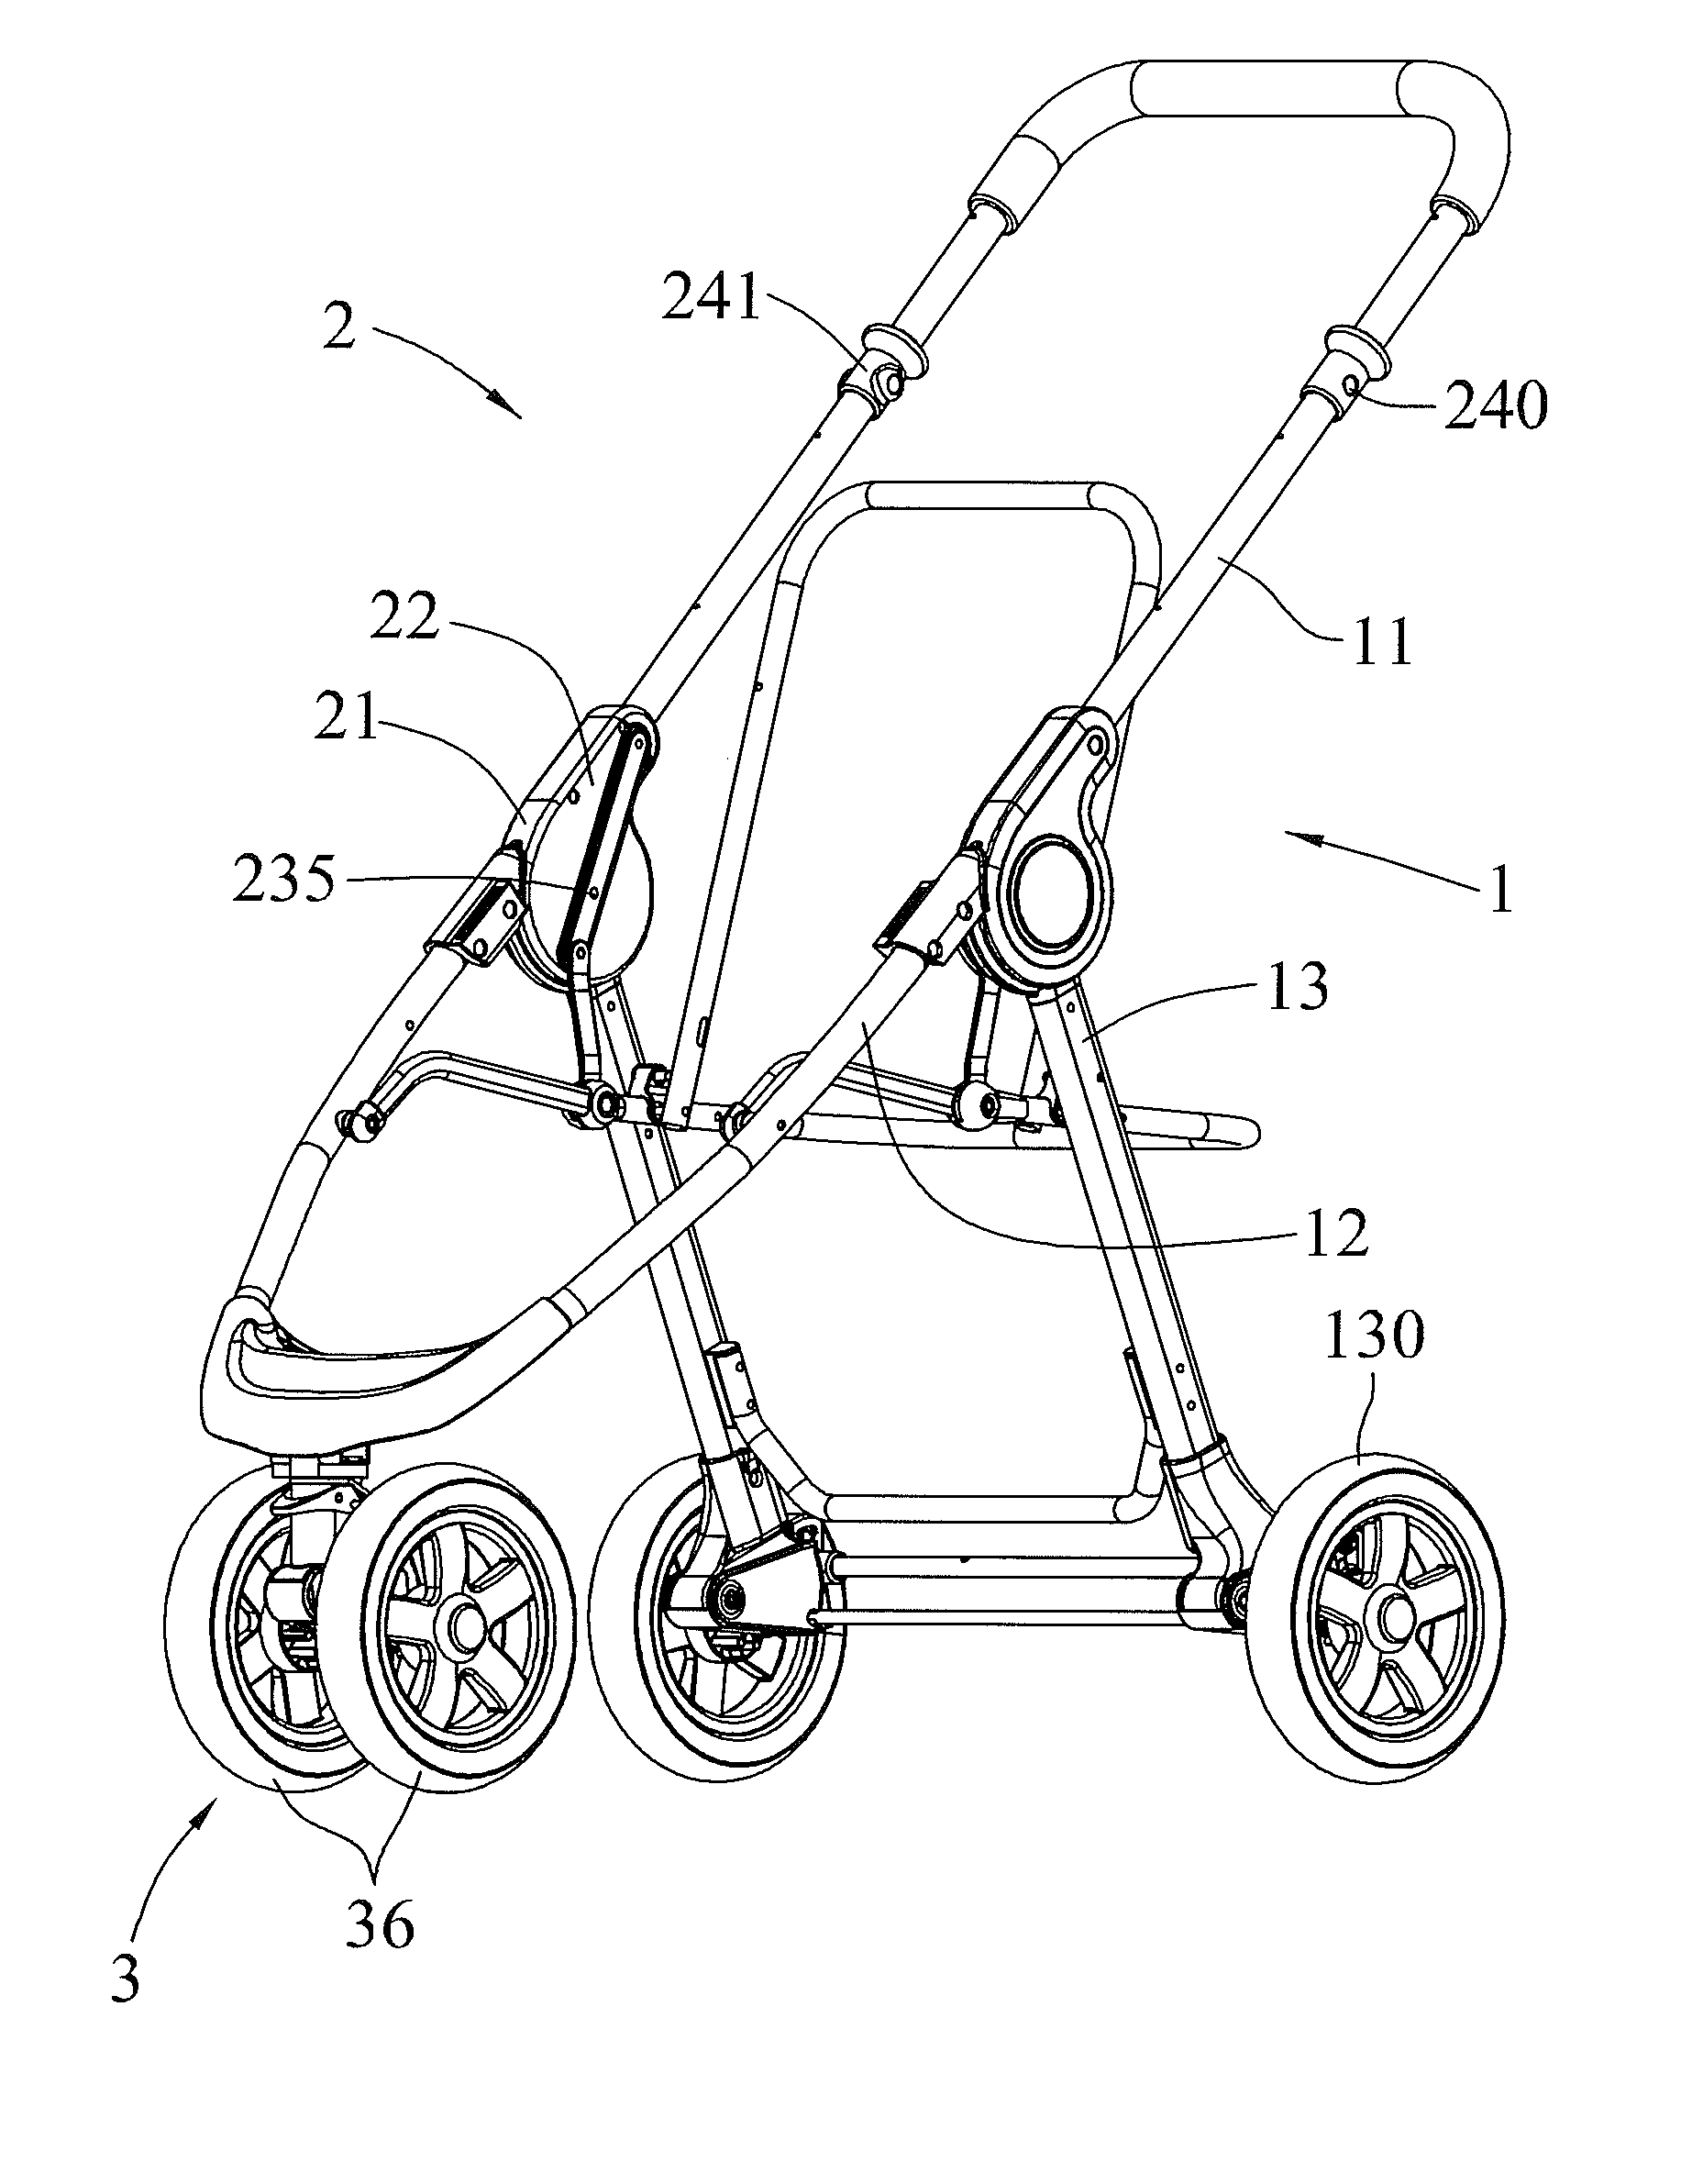 Stroller Having Shock-Absorbing Function